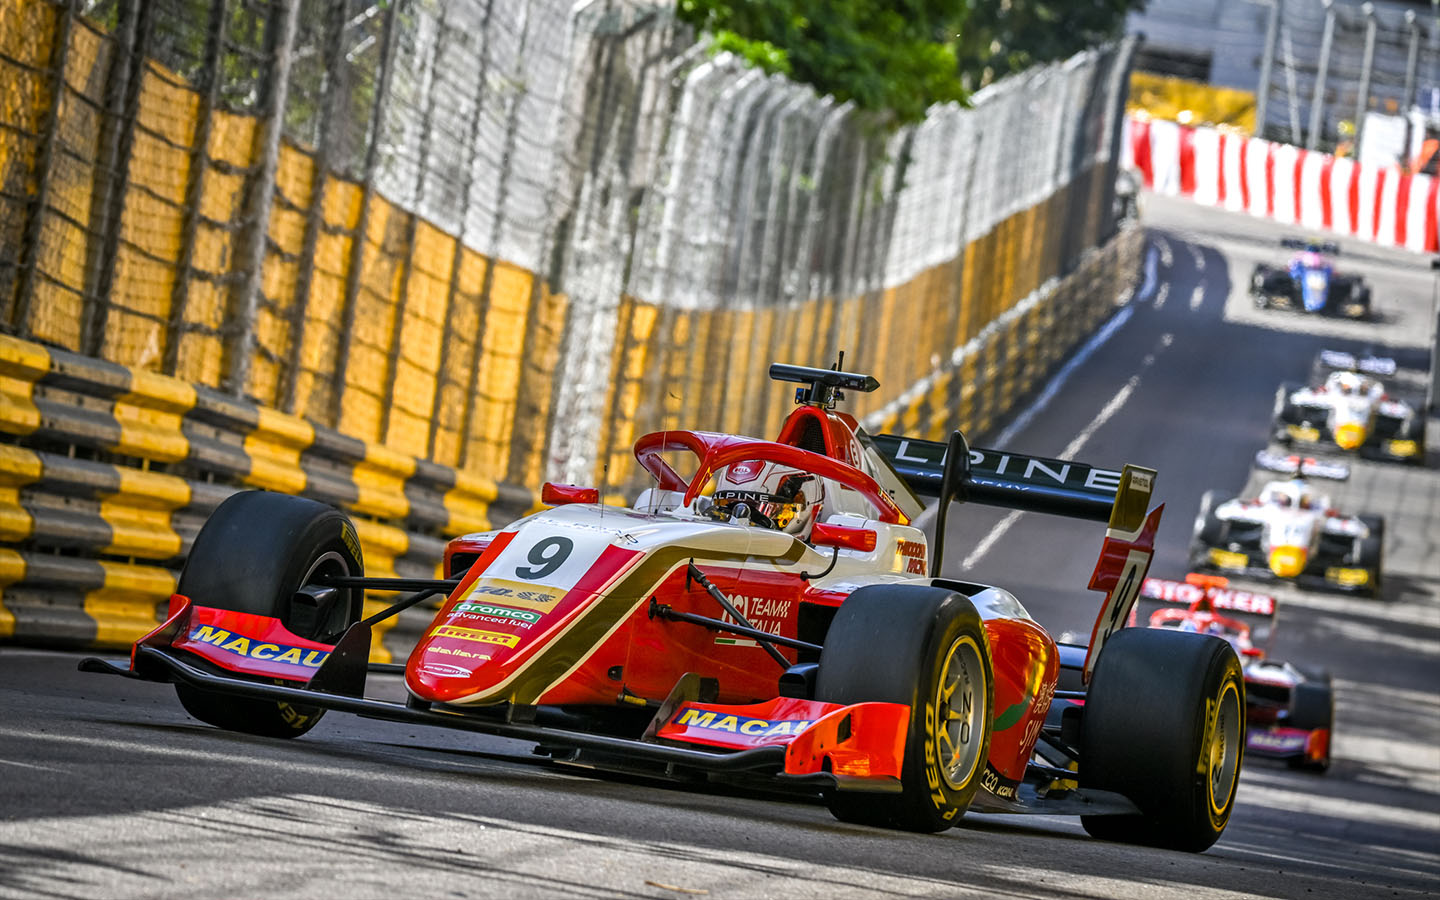 Goodbye, Formula 3. The Macau Grand Prix loses its main attraction